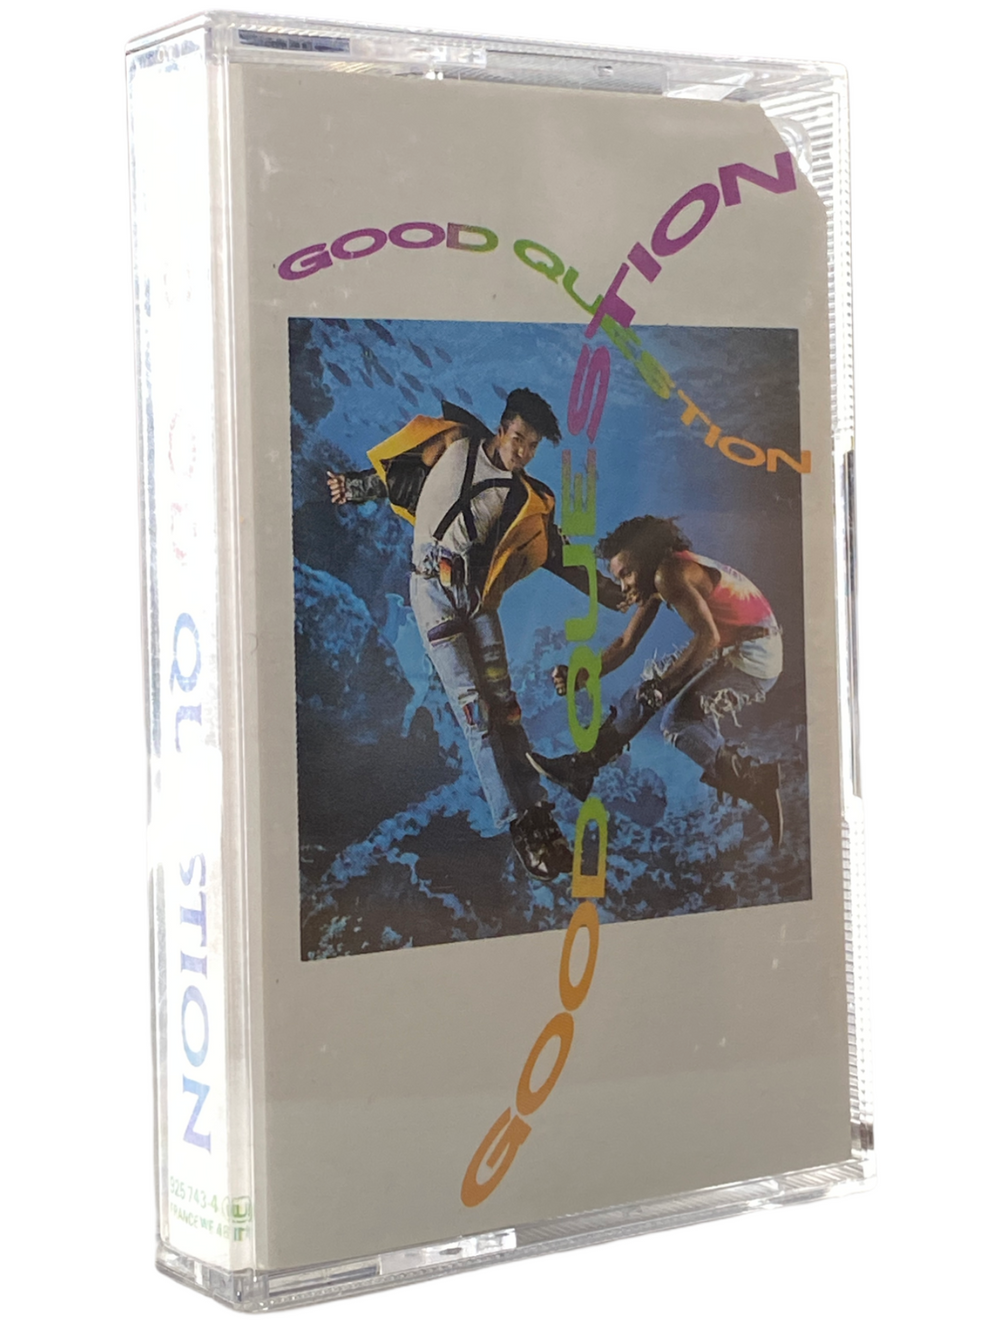 Prince – Good Question Self Titled Original Cassette Tape 1988 EU Release Prince